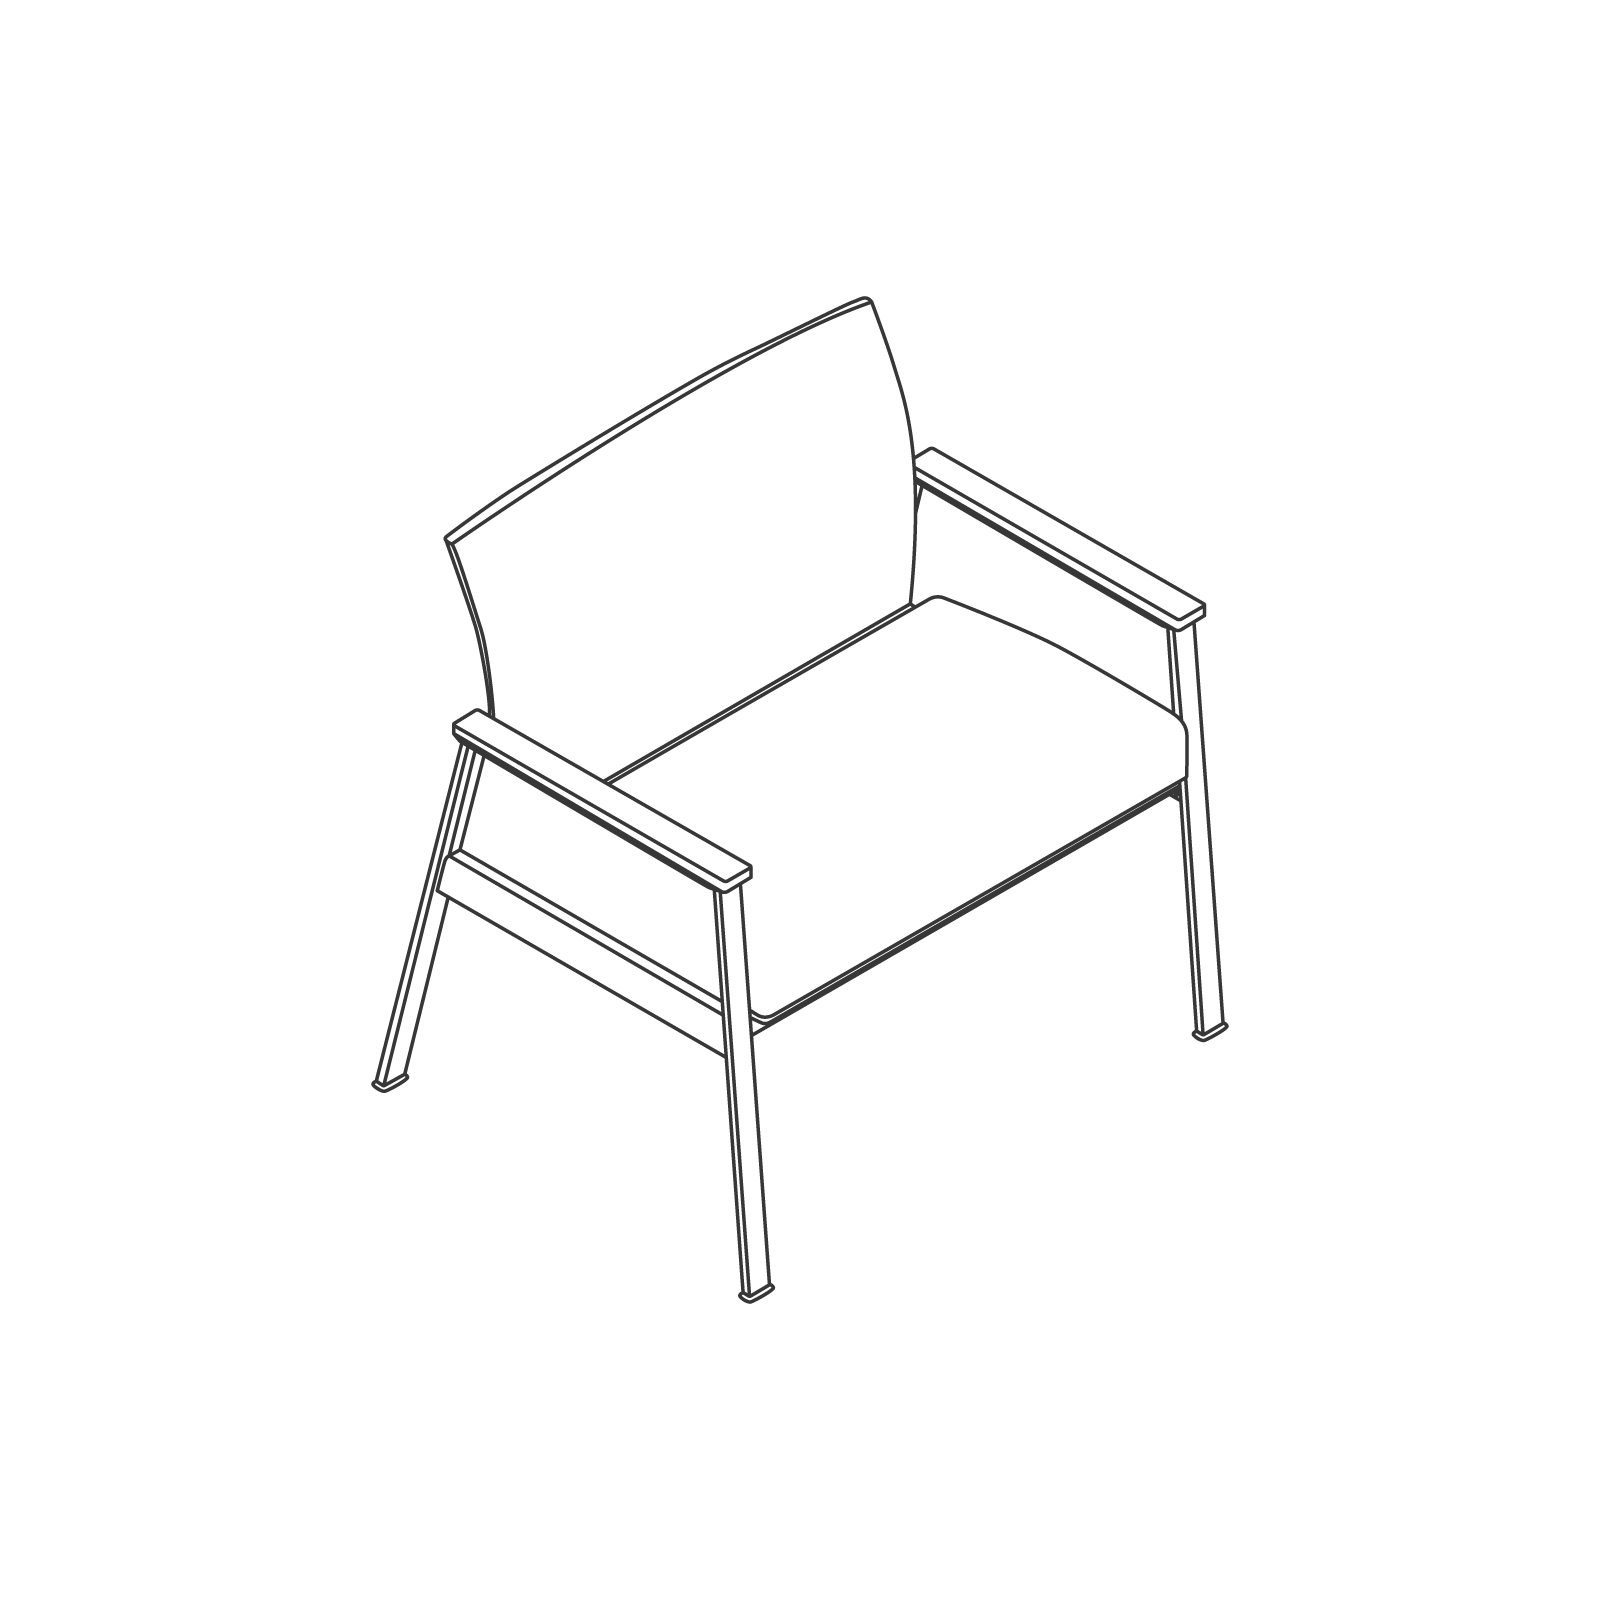 A line drawing - Nemschoff Easton Plus Chair–Closed Arm